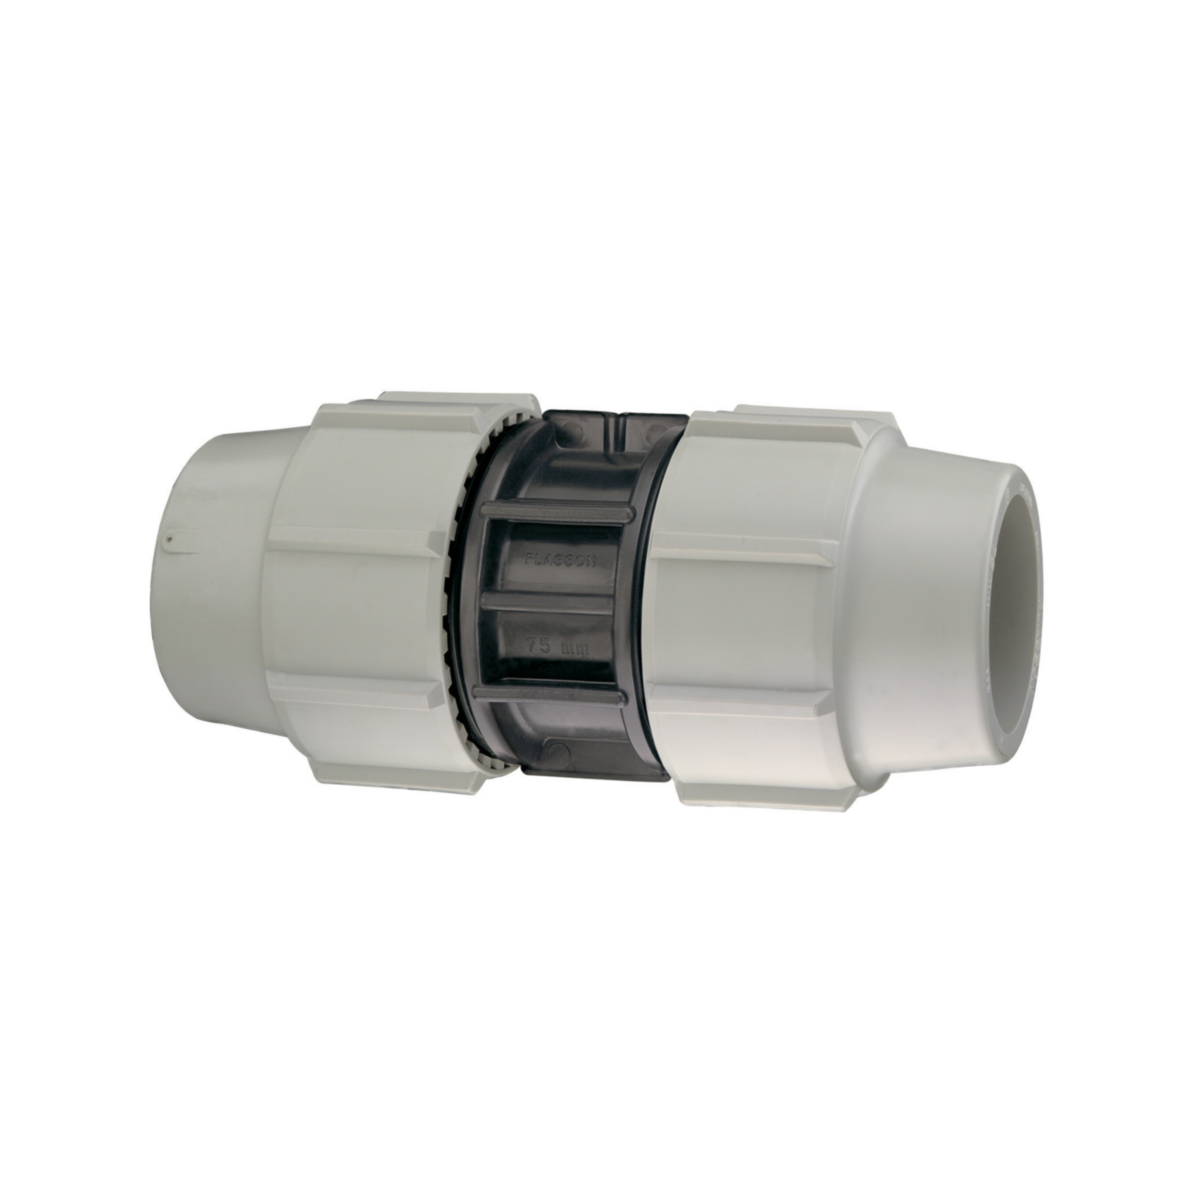 Manchon - Pour tube PE - Diamètre 50 mm - Plasson 701050 - 3..